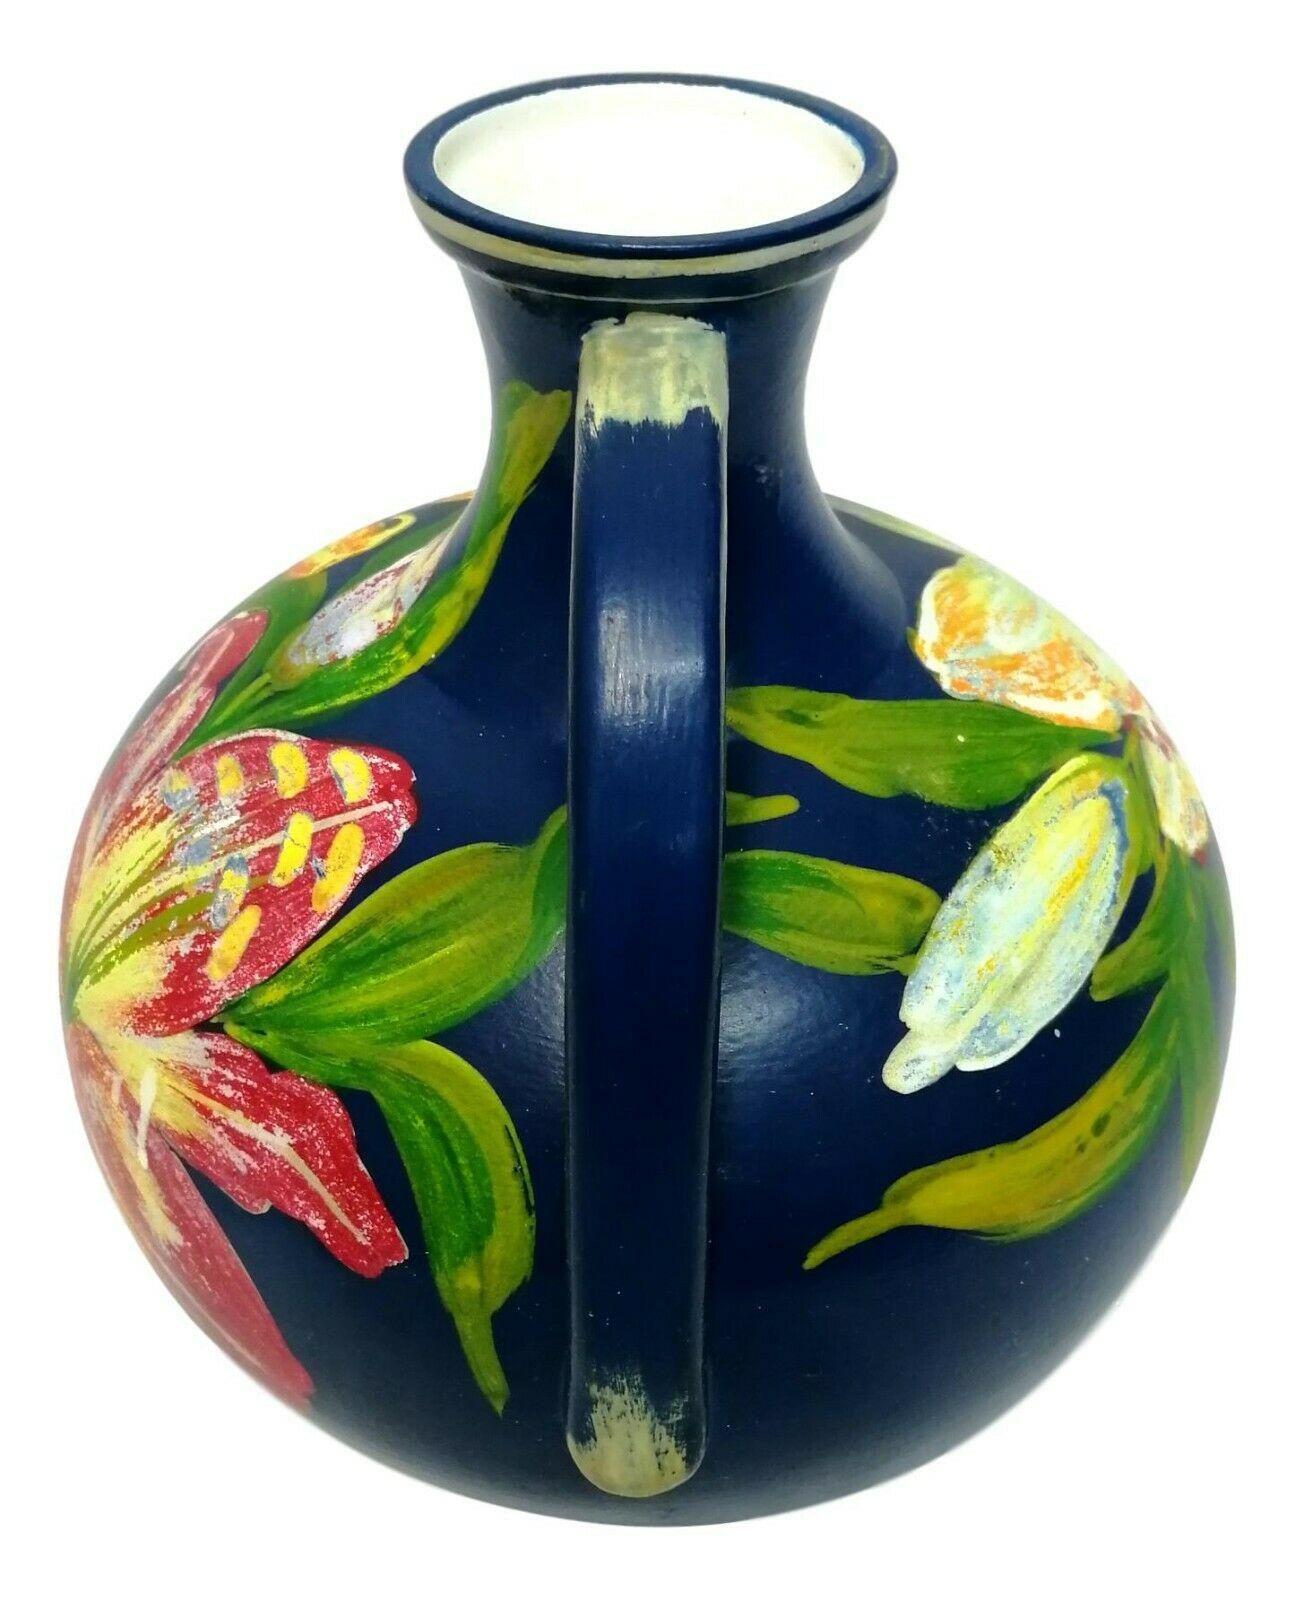 Polychrome ceramic jar, original production by SICA (Italian artistic ceramic company) from the 1950s, model 